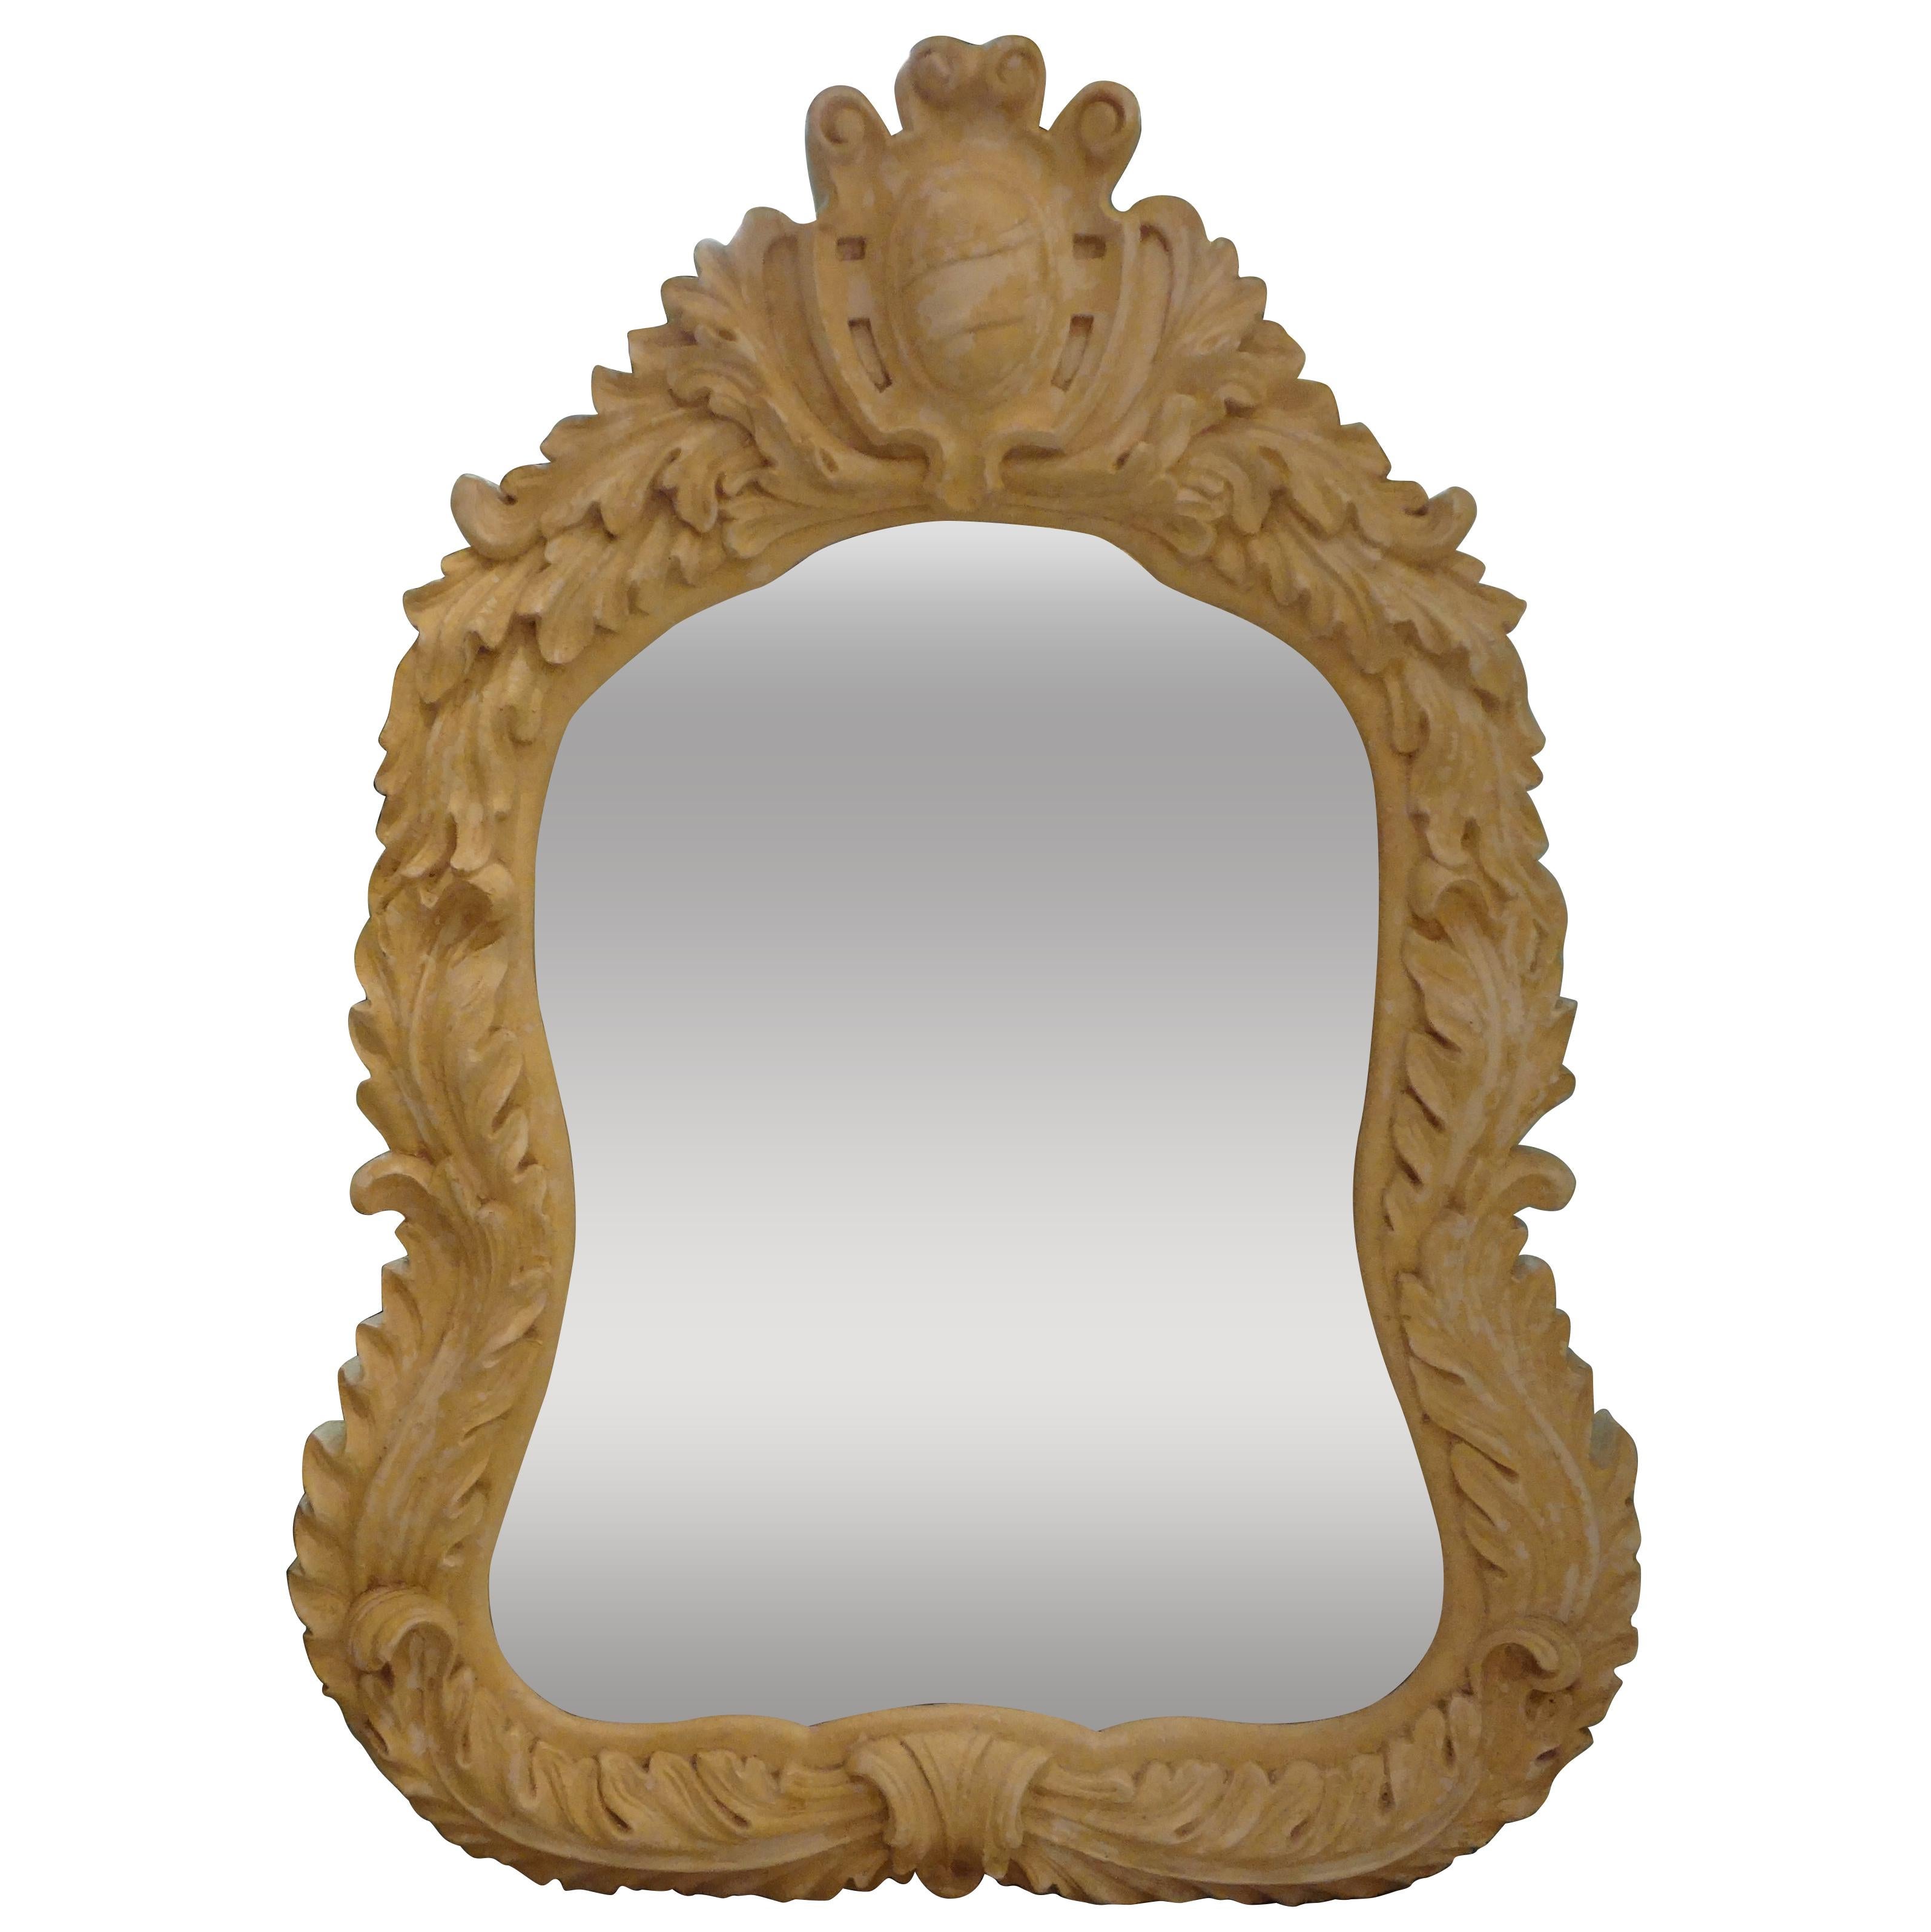 Serge Roche Inspired Plaster Shield Mirror 